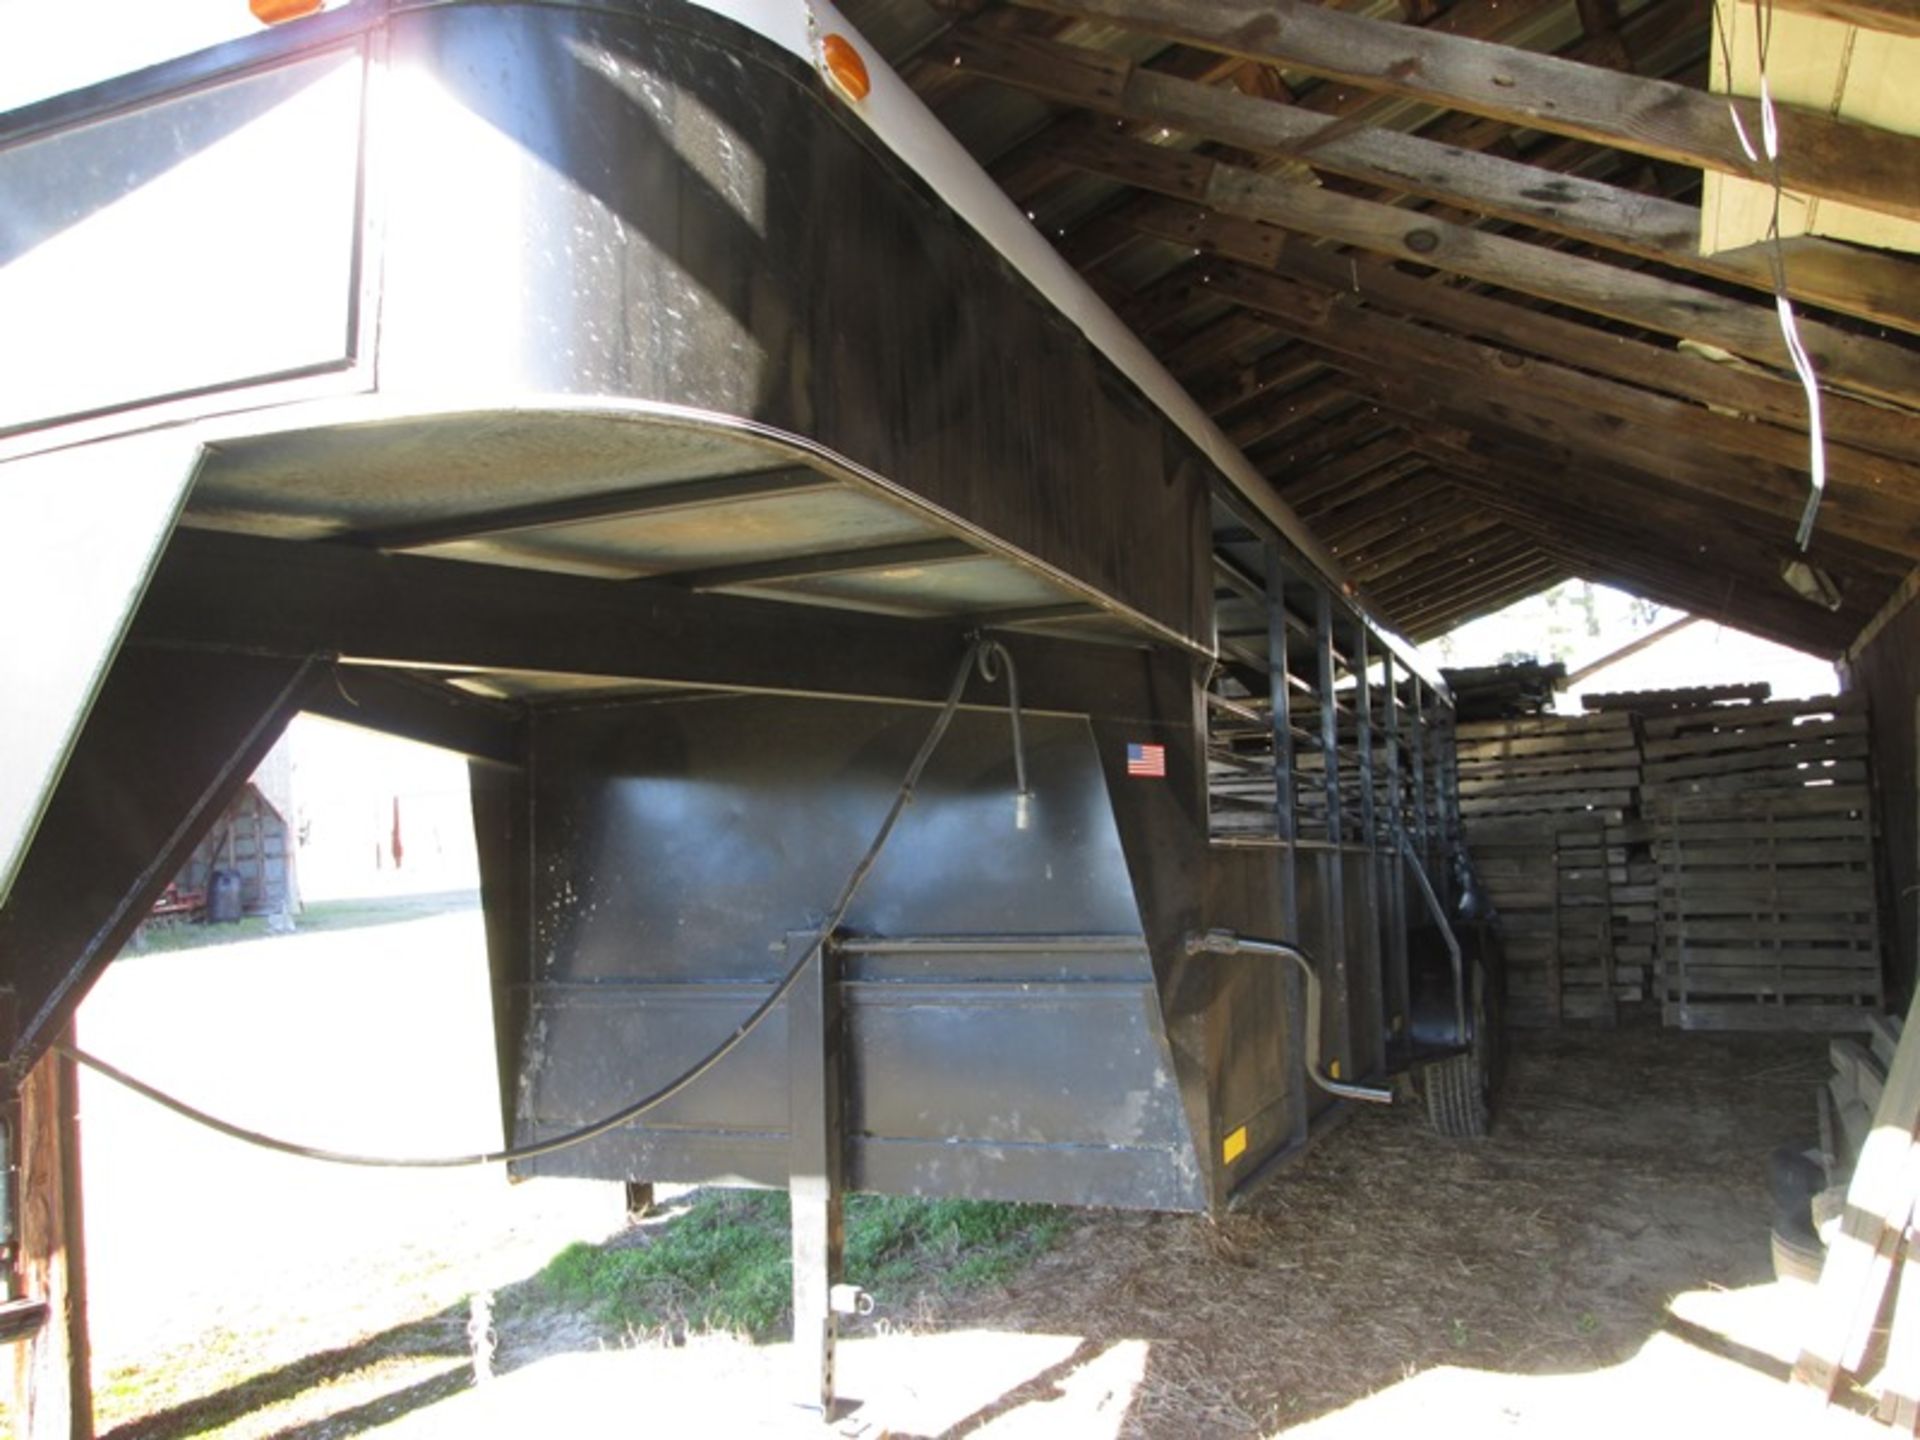 1988 Trai 20' steel livestock trailer vin# NCX701068 - Image 2 of 8